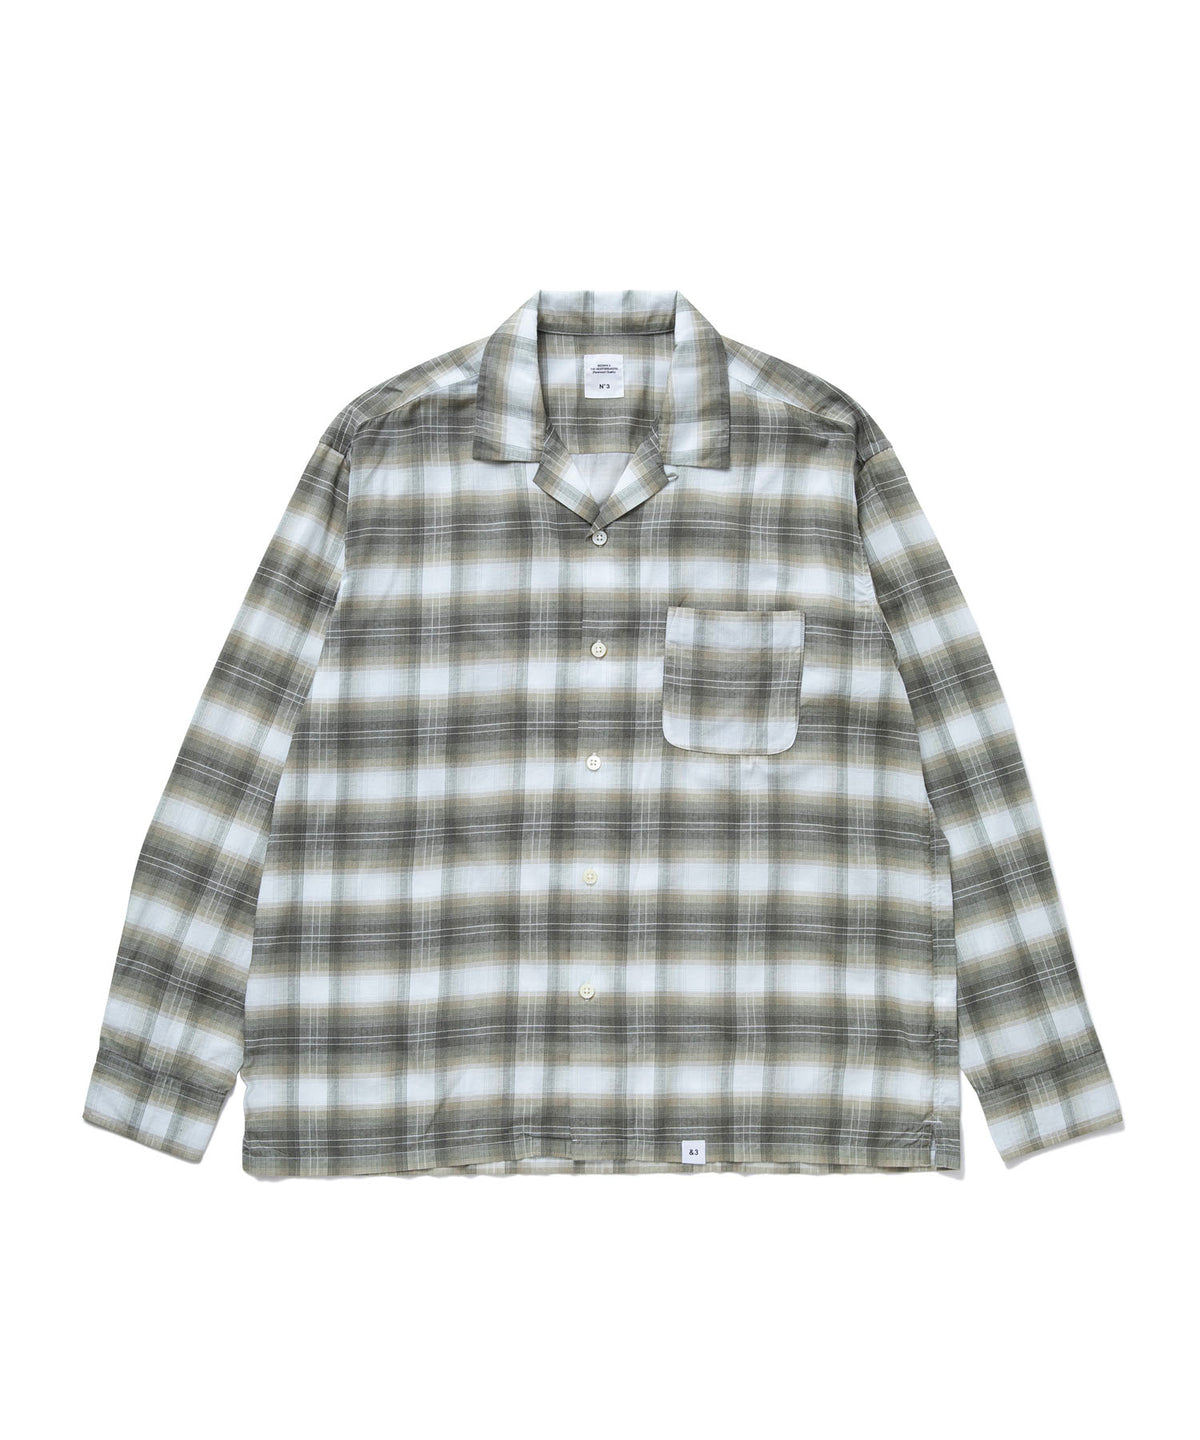 PENDLETONの9090's Ombre check shirt - シャツ